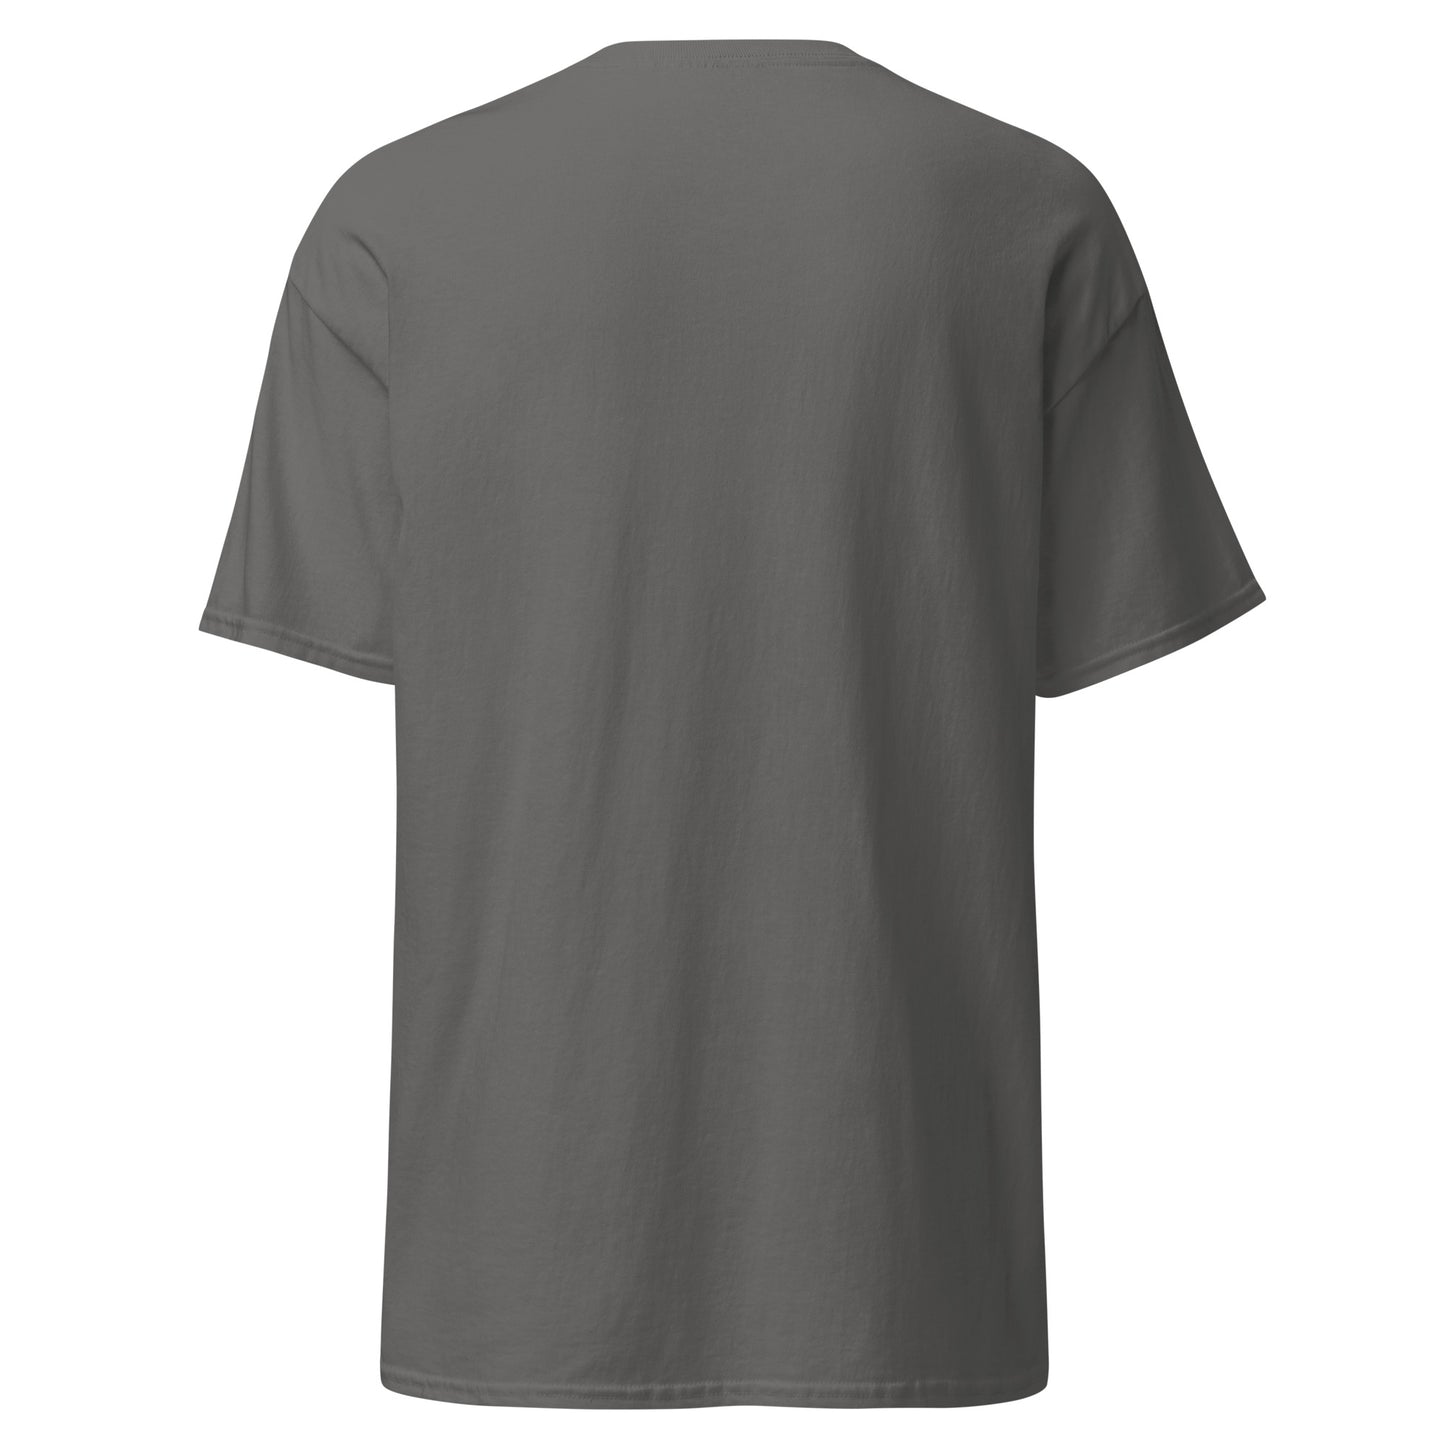 Customizable T-Shirt Front Print